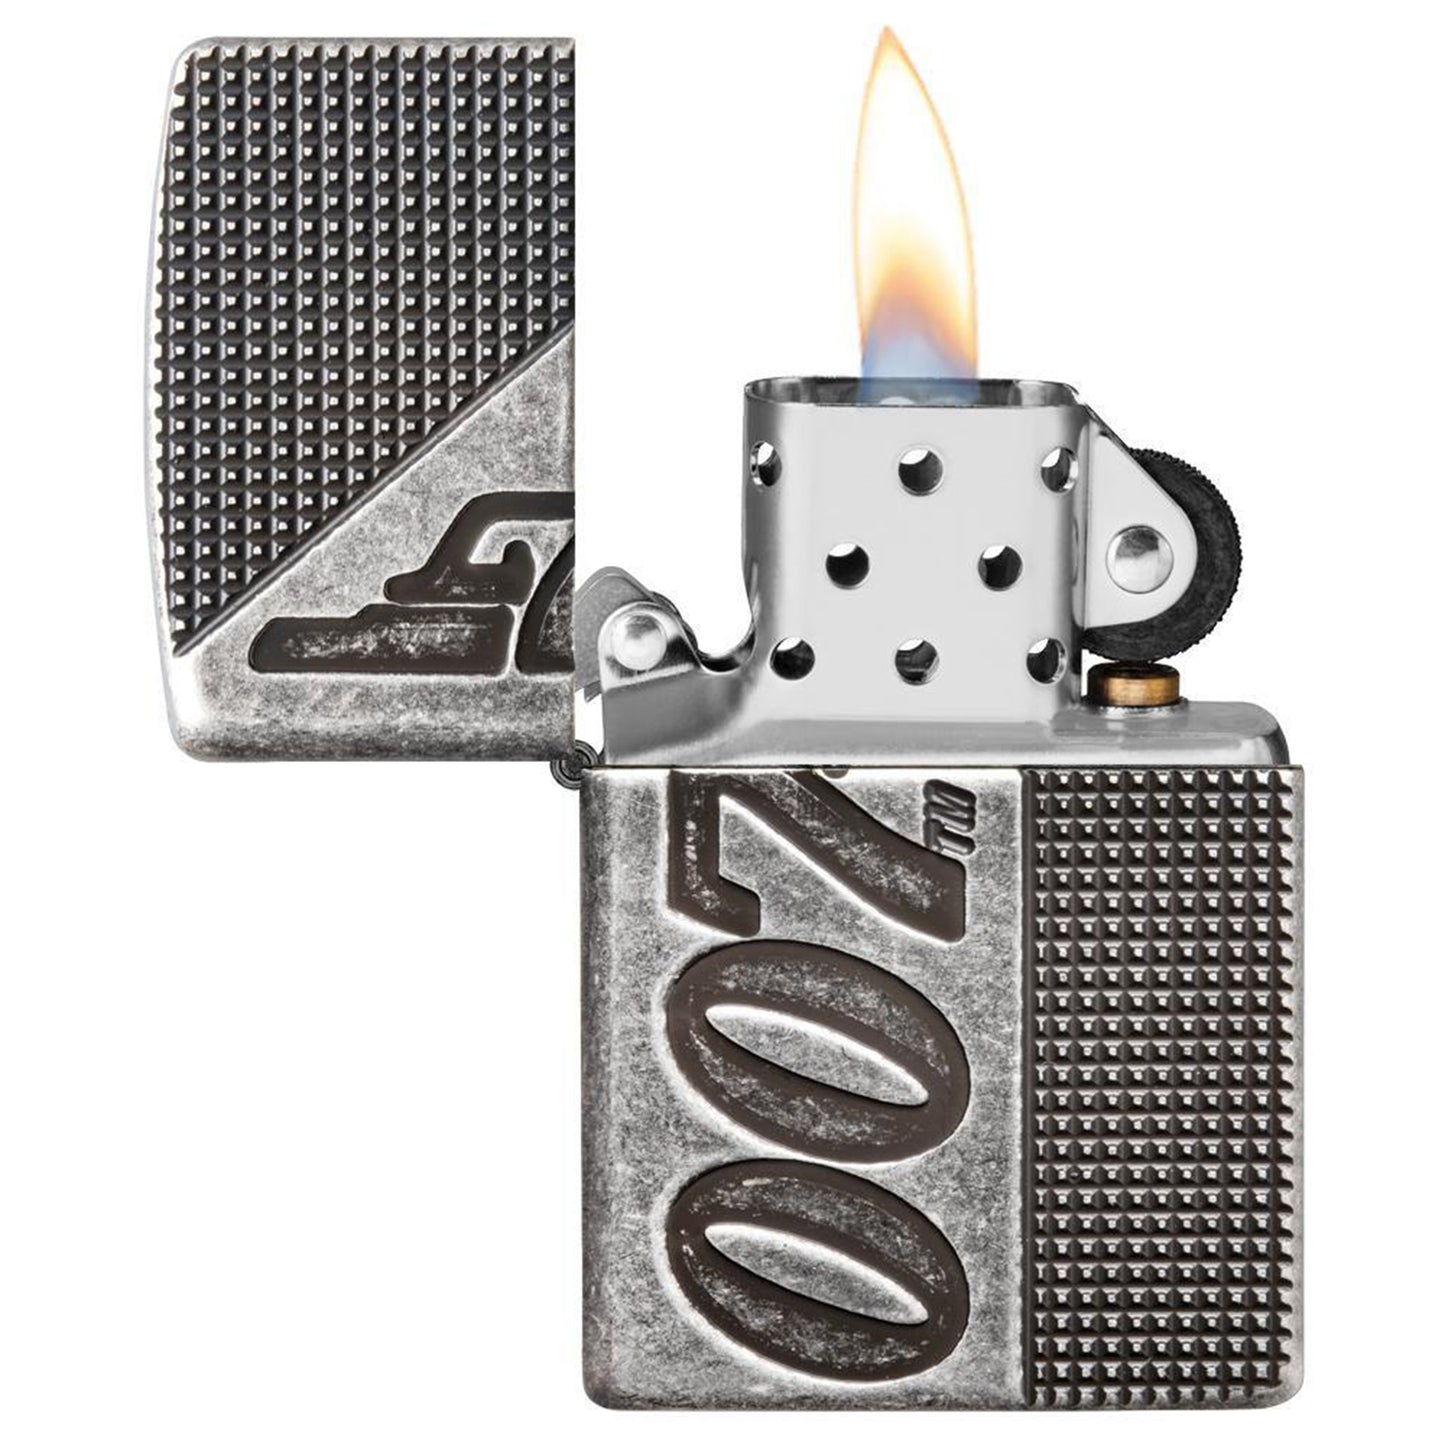 Zippo 007 Antique Lighter #28